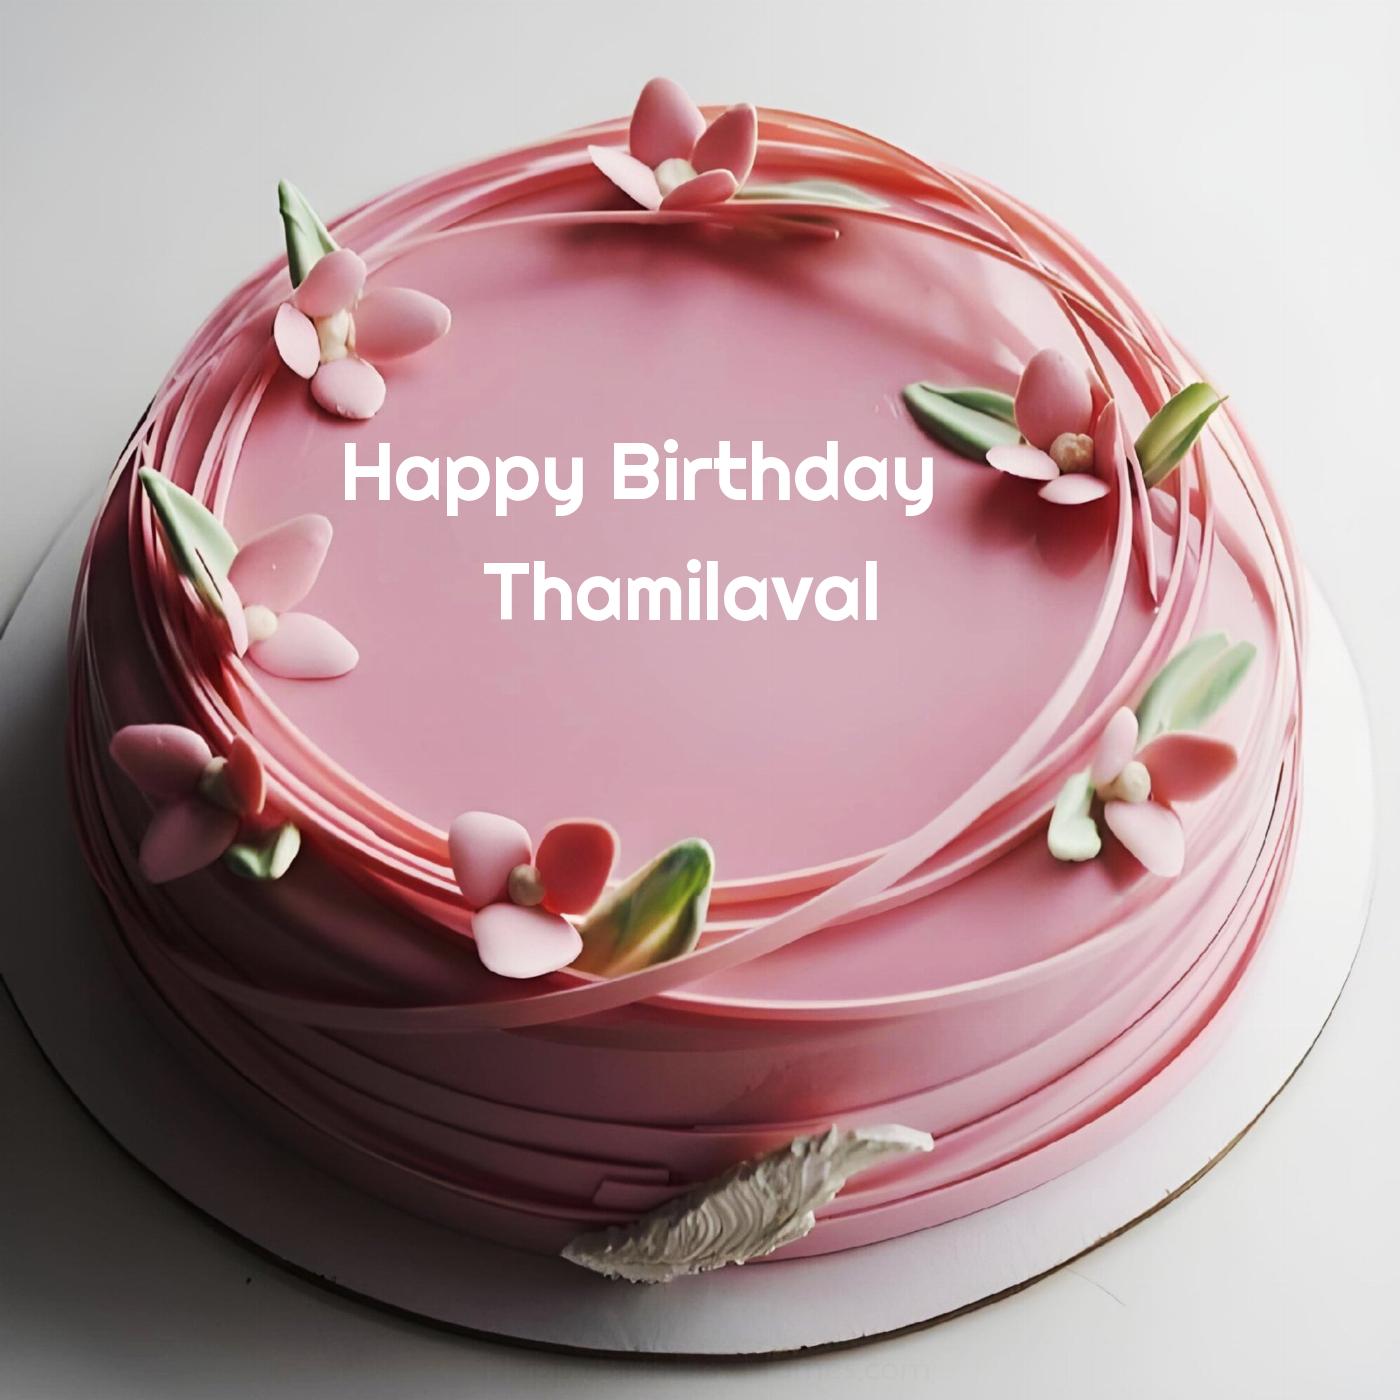 Happy Birthday Thamilaval Pink Flowers Cake